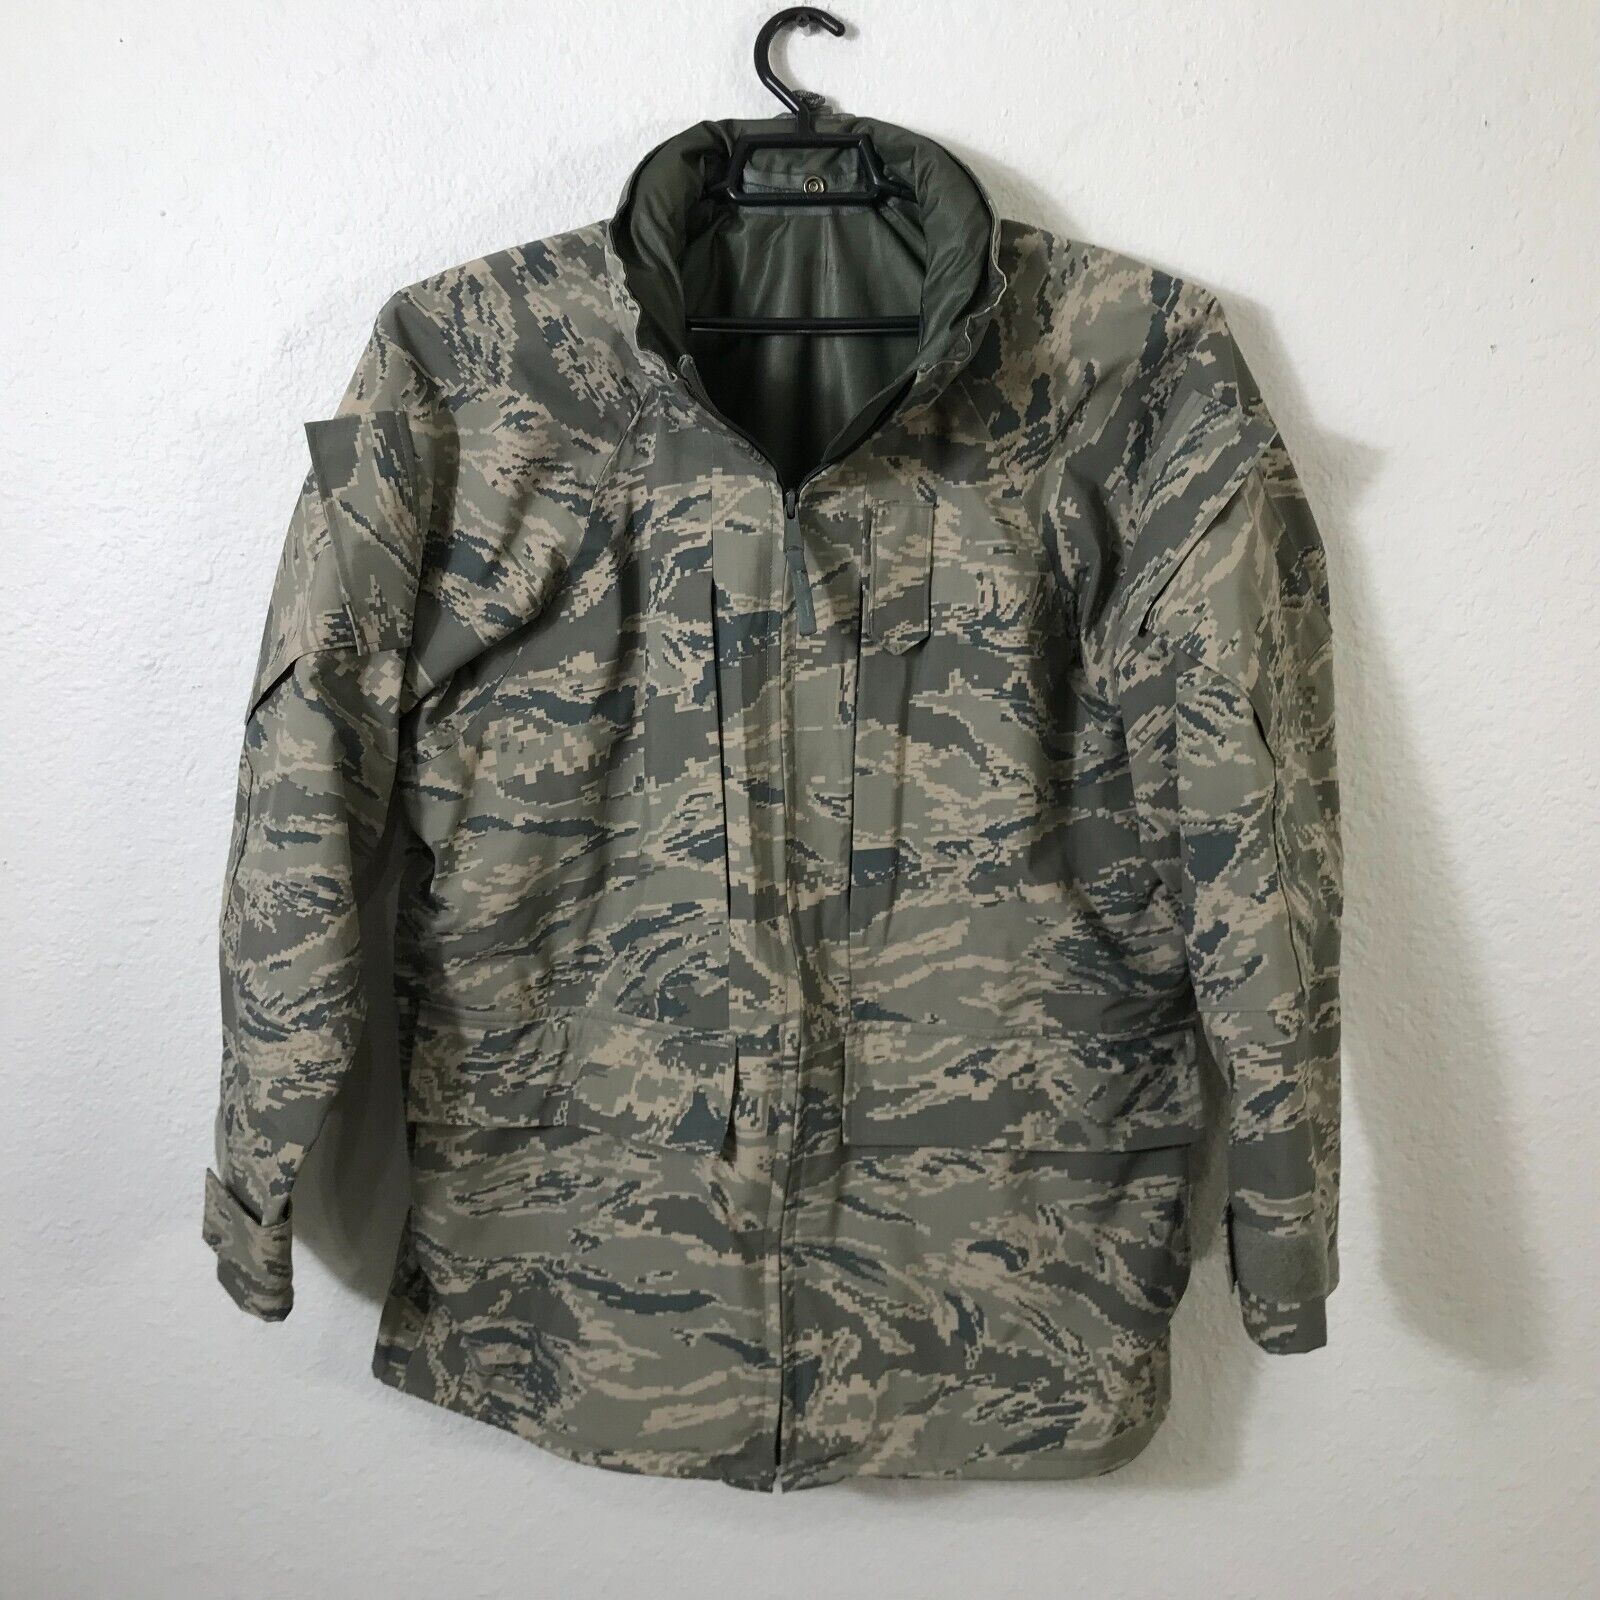 Parka All Purpose Environmental Digital Camouflage Gor-Tex Jacket Size Medium